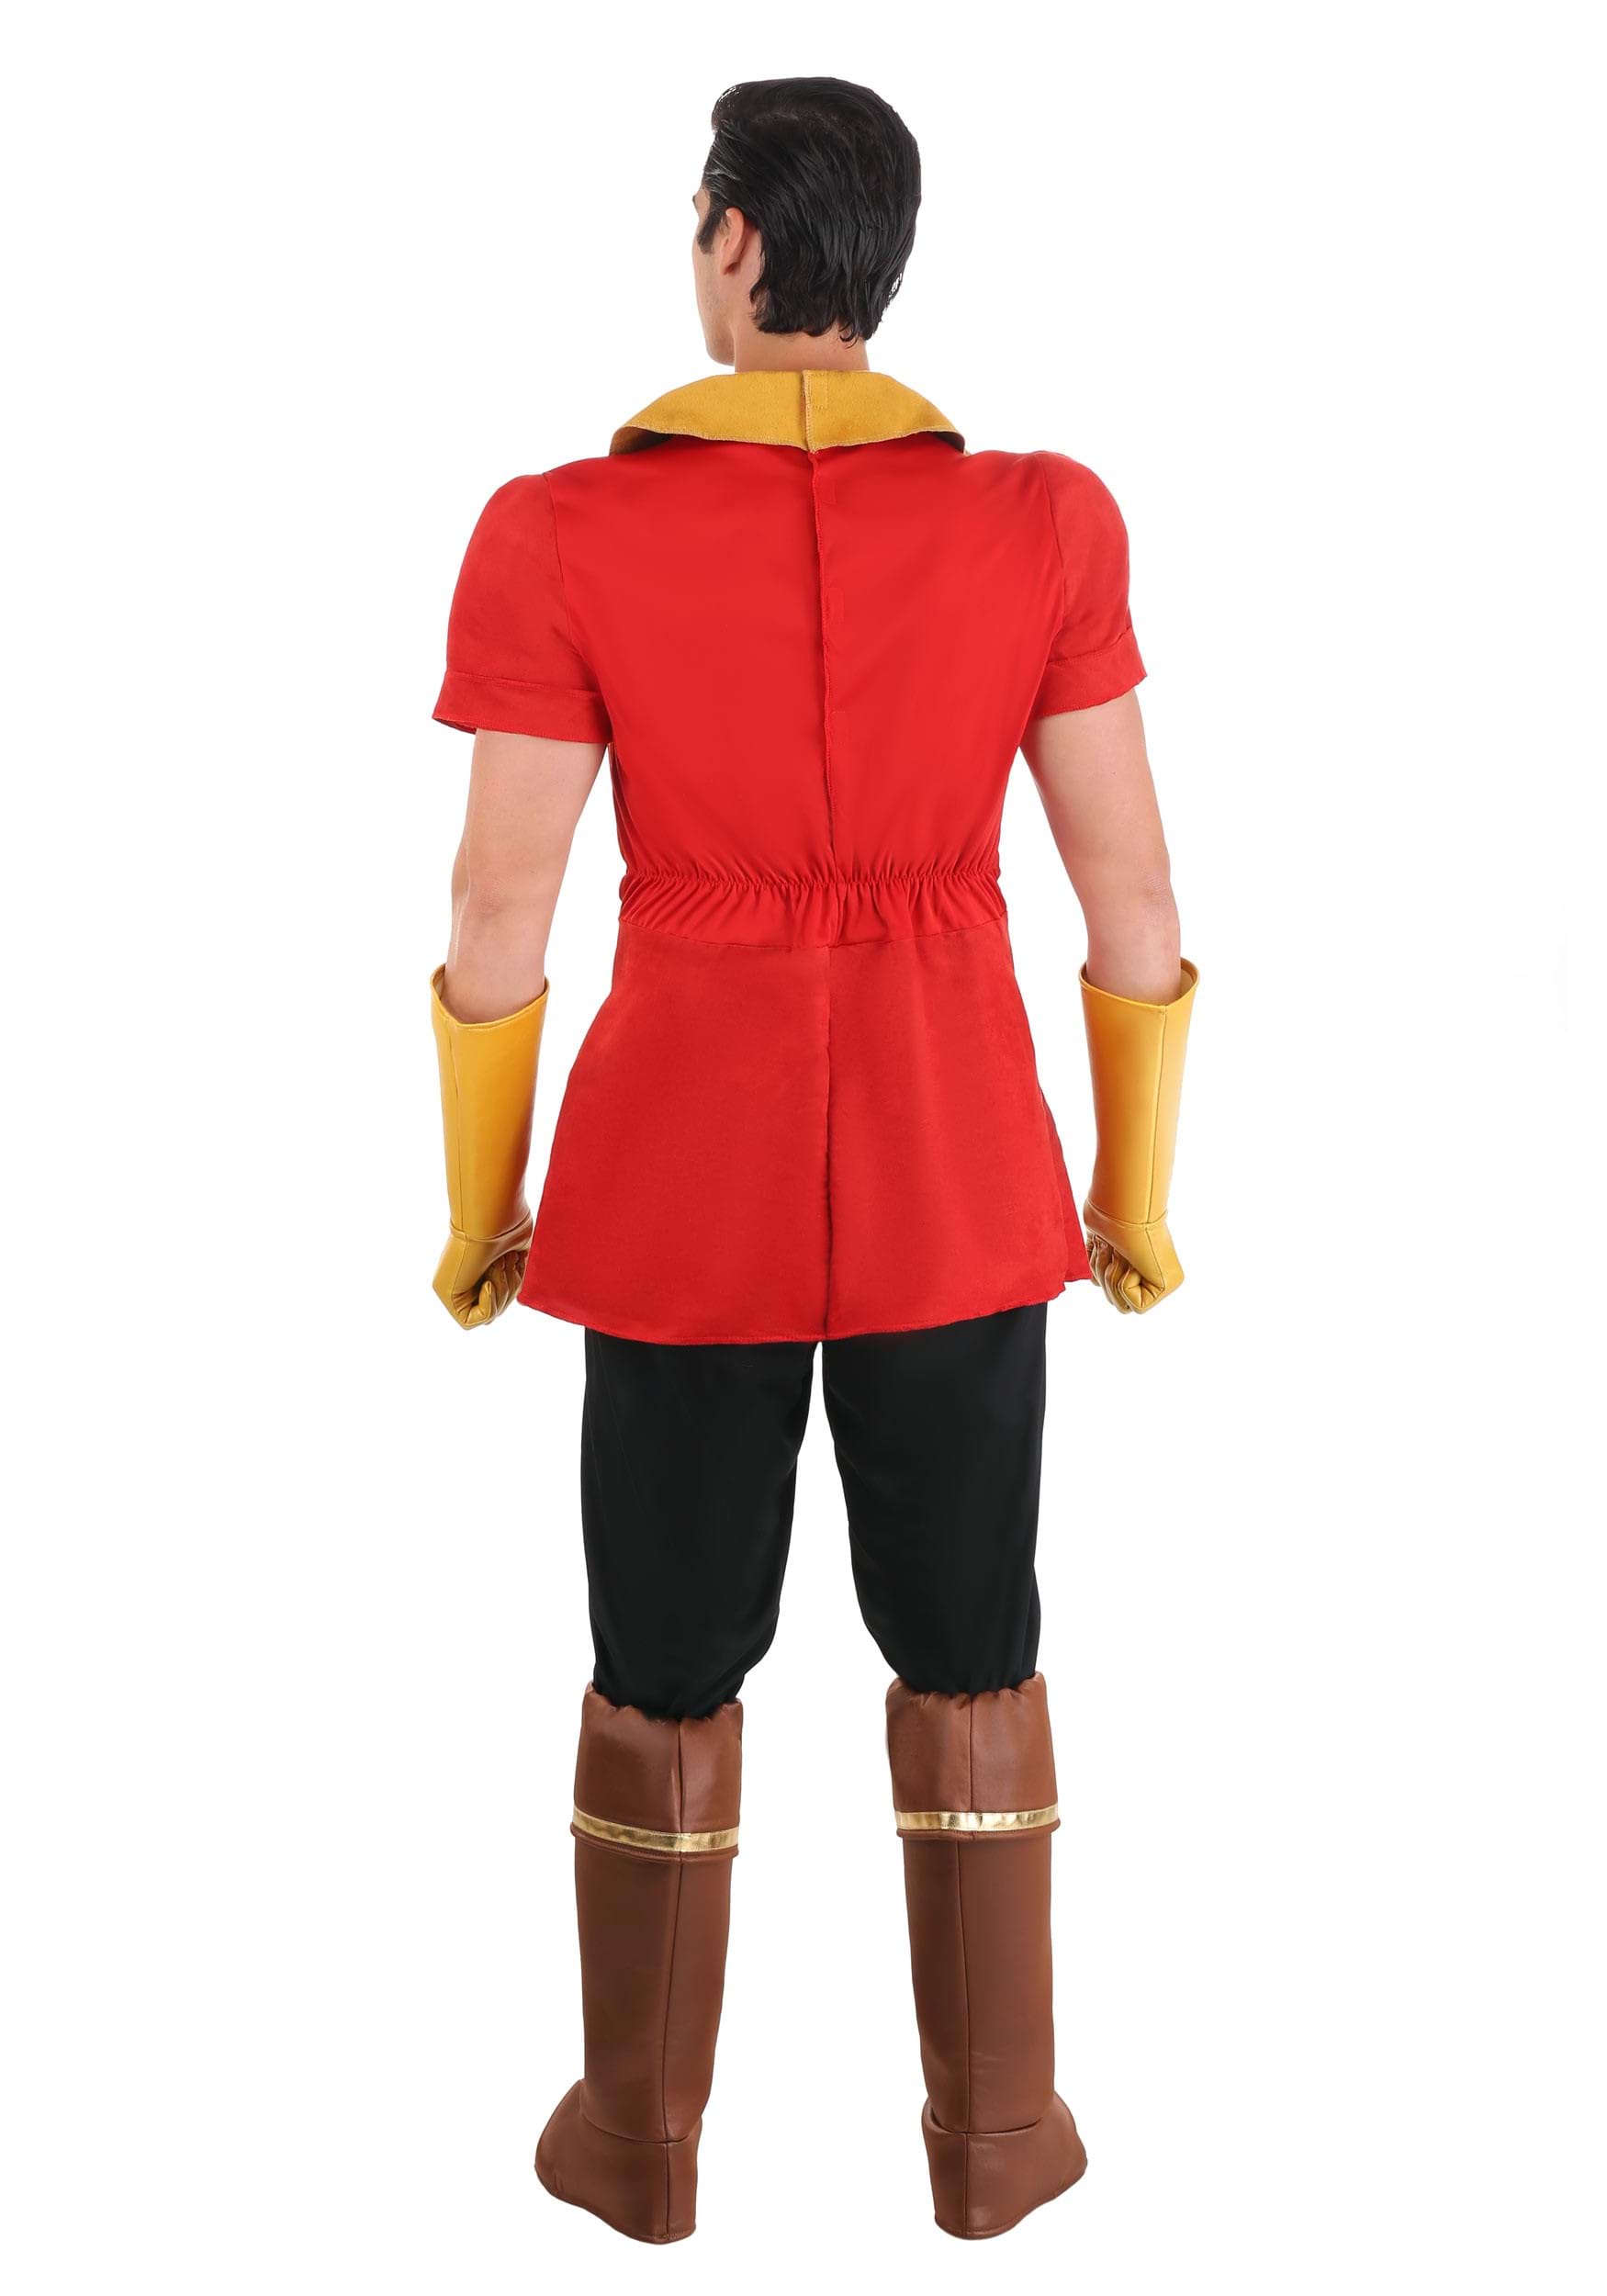 Disney Beauty And The Beast Gaston Fancy Dress Costume For Men